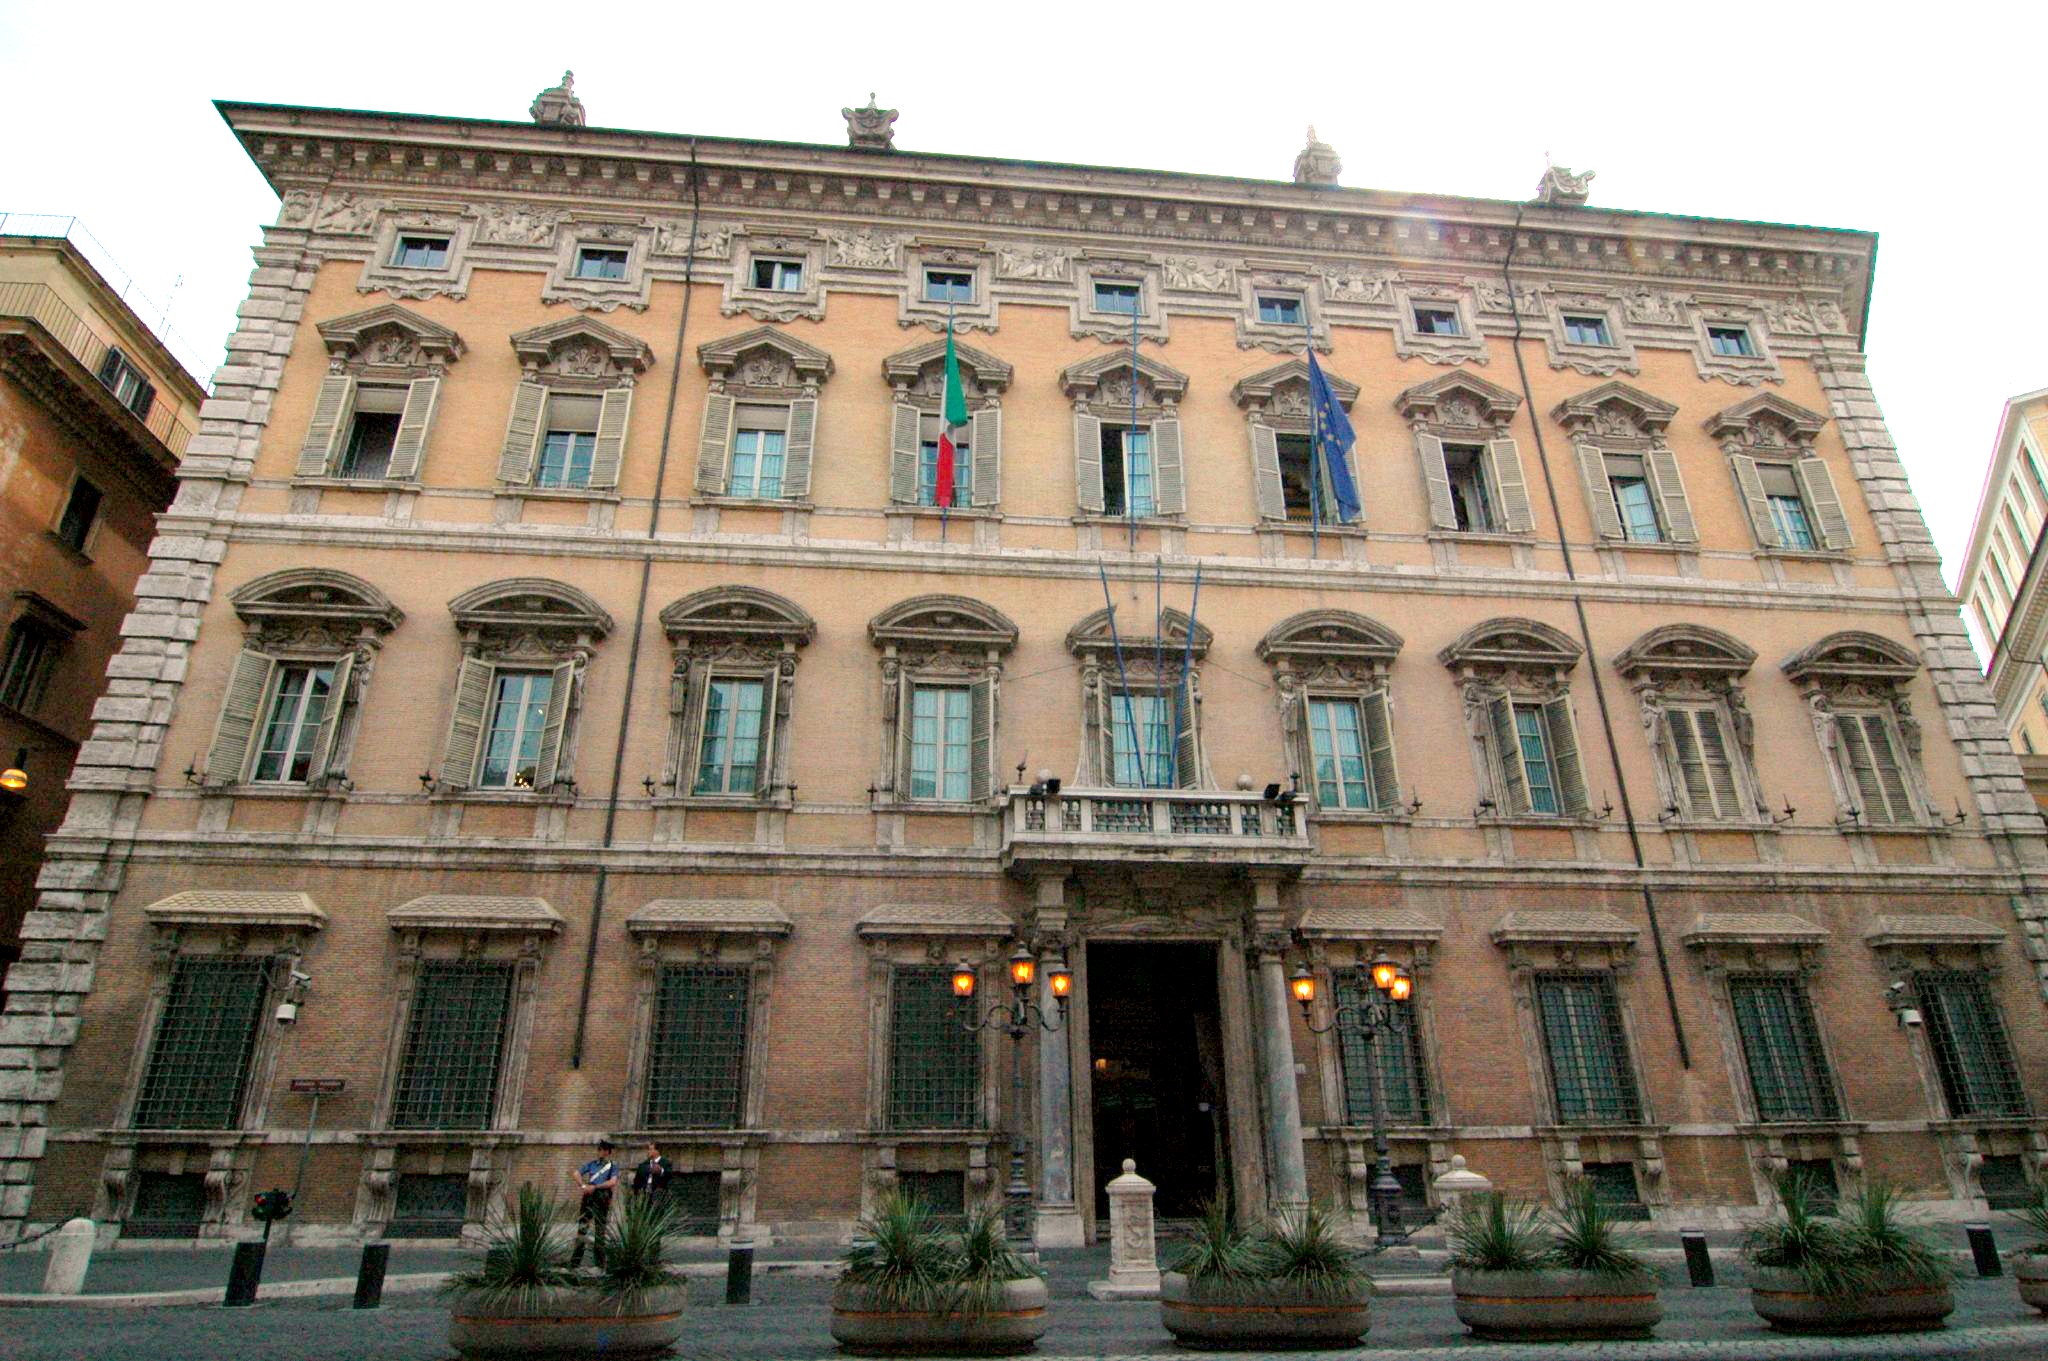 Palazzo Madama - Photo credit: Francesco Gasparetti from Senigallia, Italy